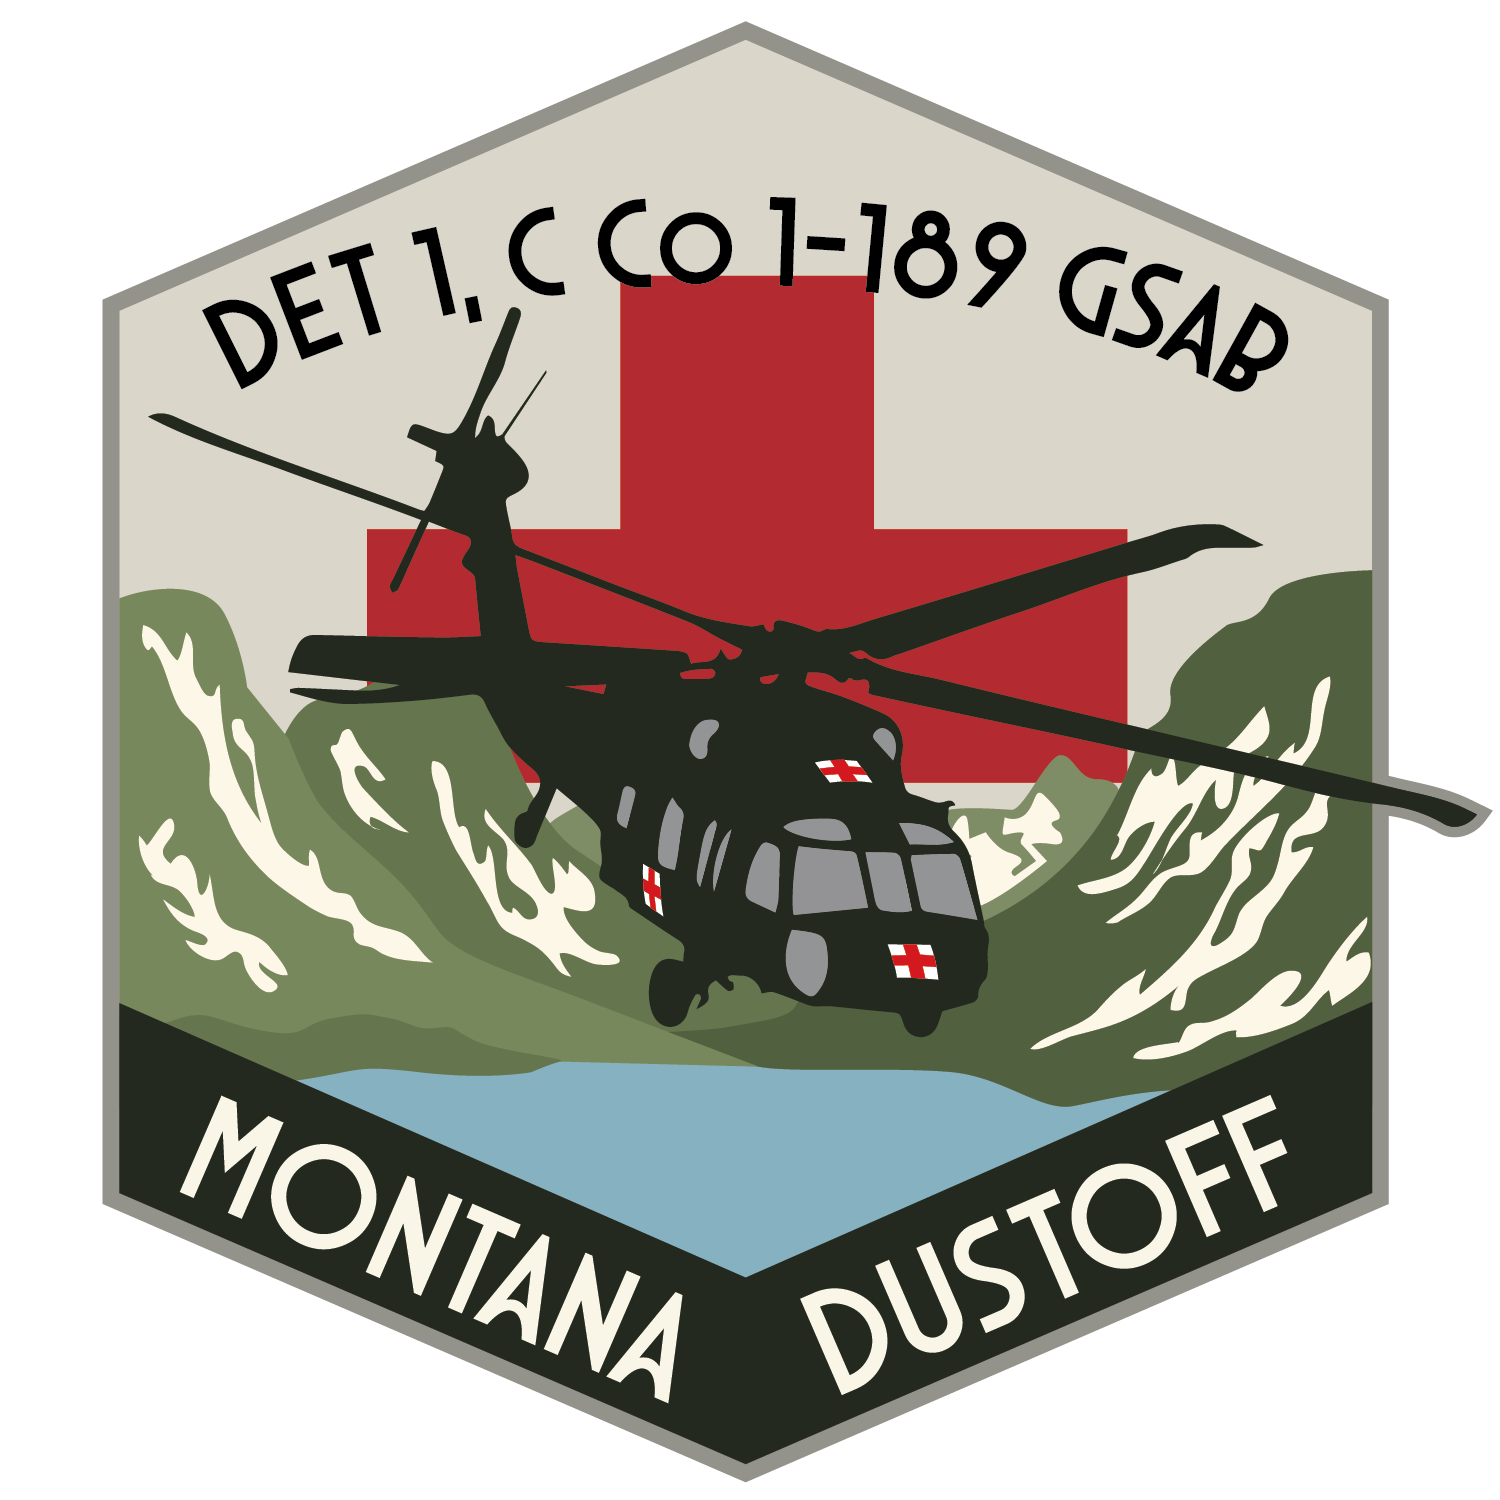 Det 1, C Co, 1-189 GSAB "Montana Dustoff"